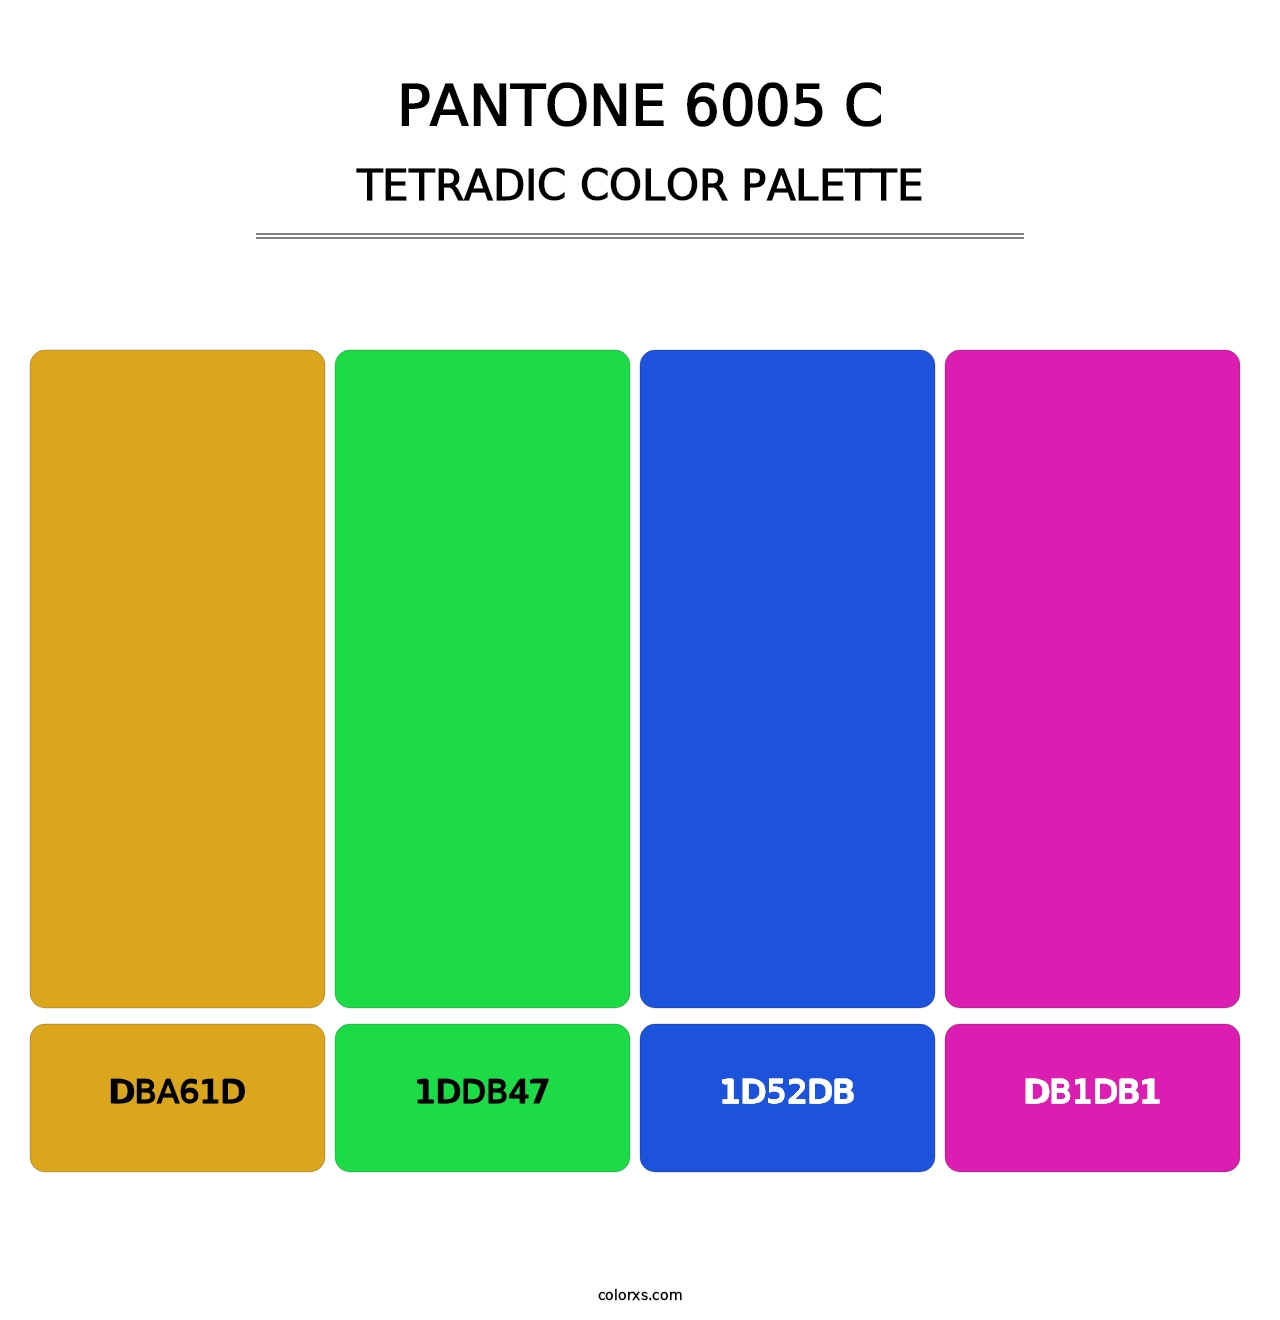 PANTONE 6005 C - Tetradic Color Palette